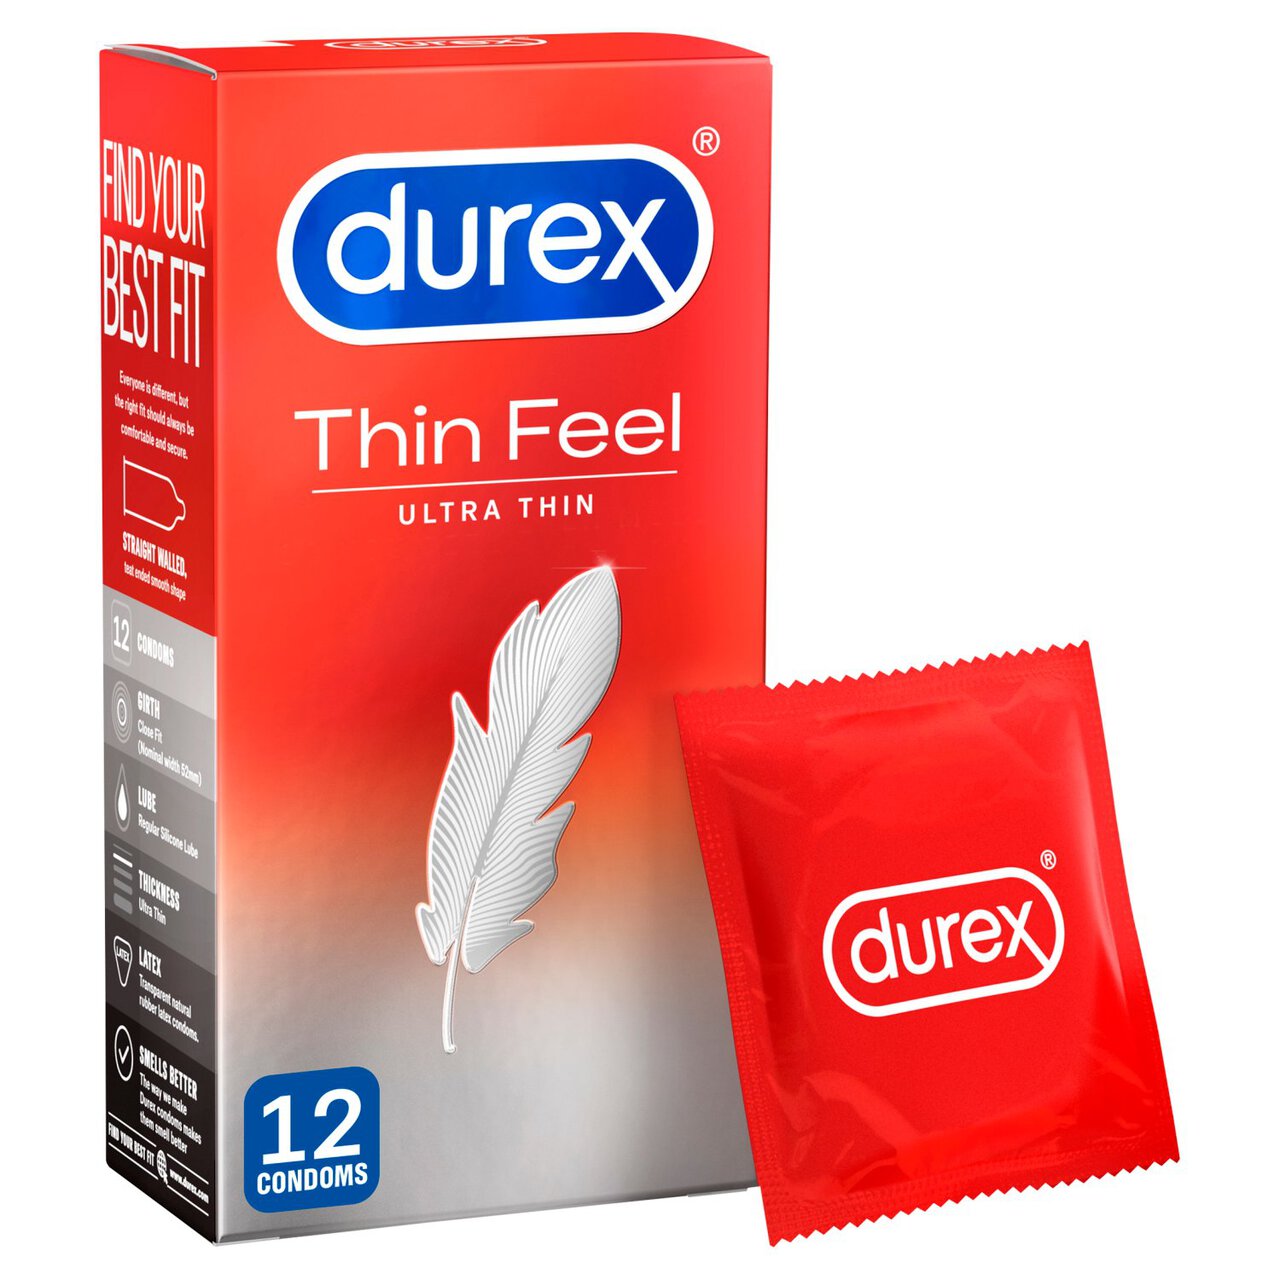 Durex Thin Feel Ultra Thin 12 Condoms 12 per pack